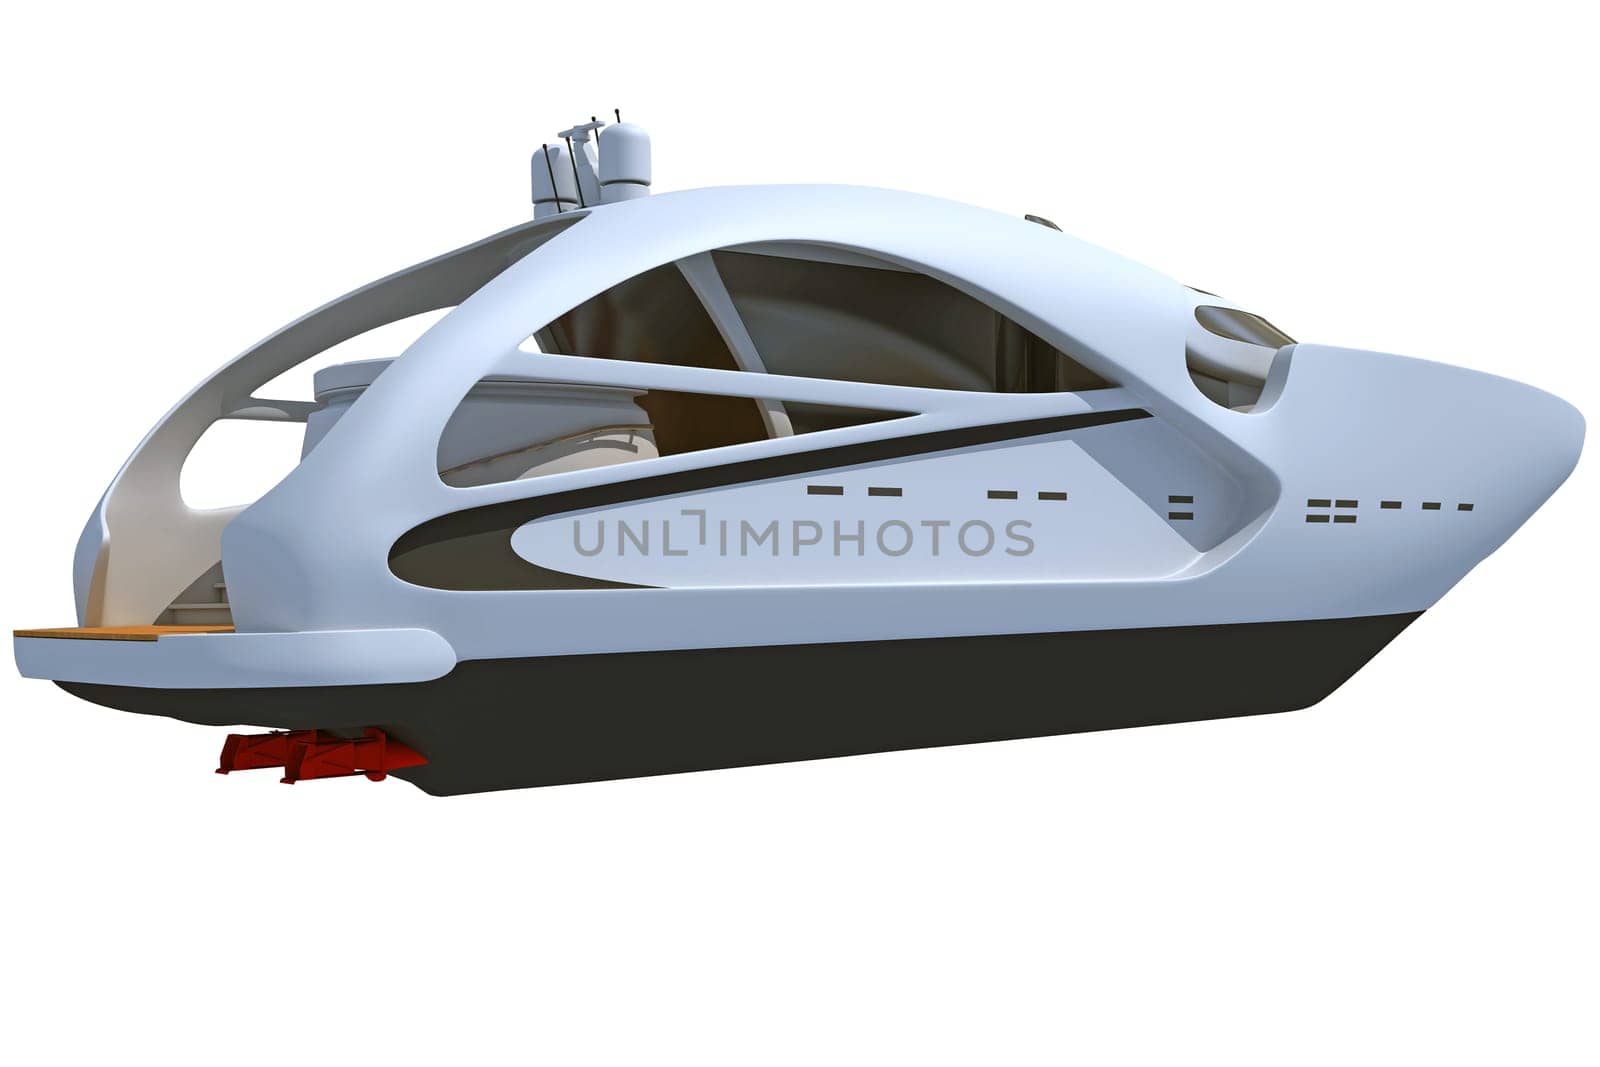 Luxury Yacht 3D rendering model on white background